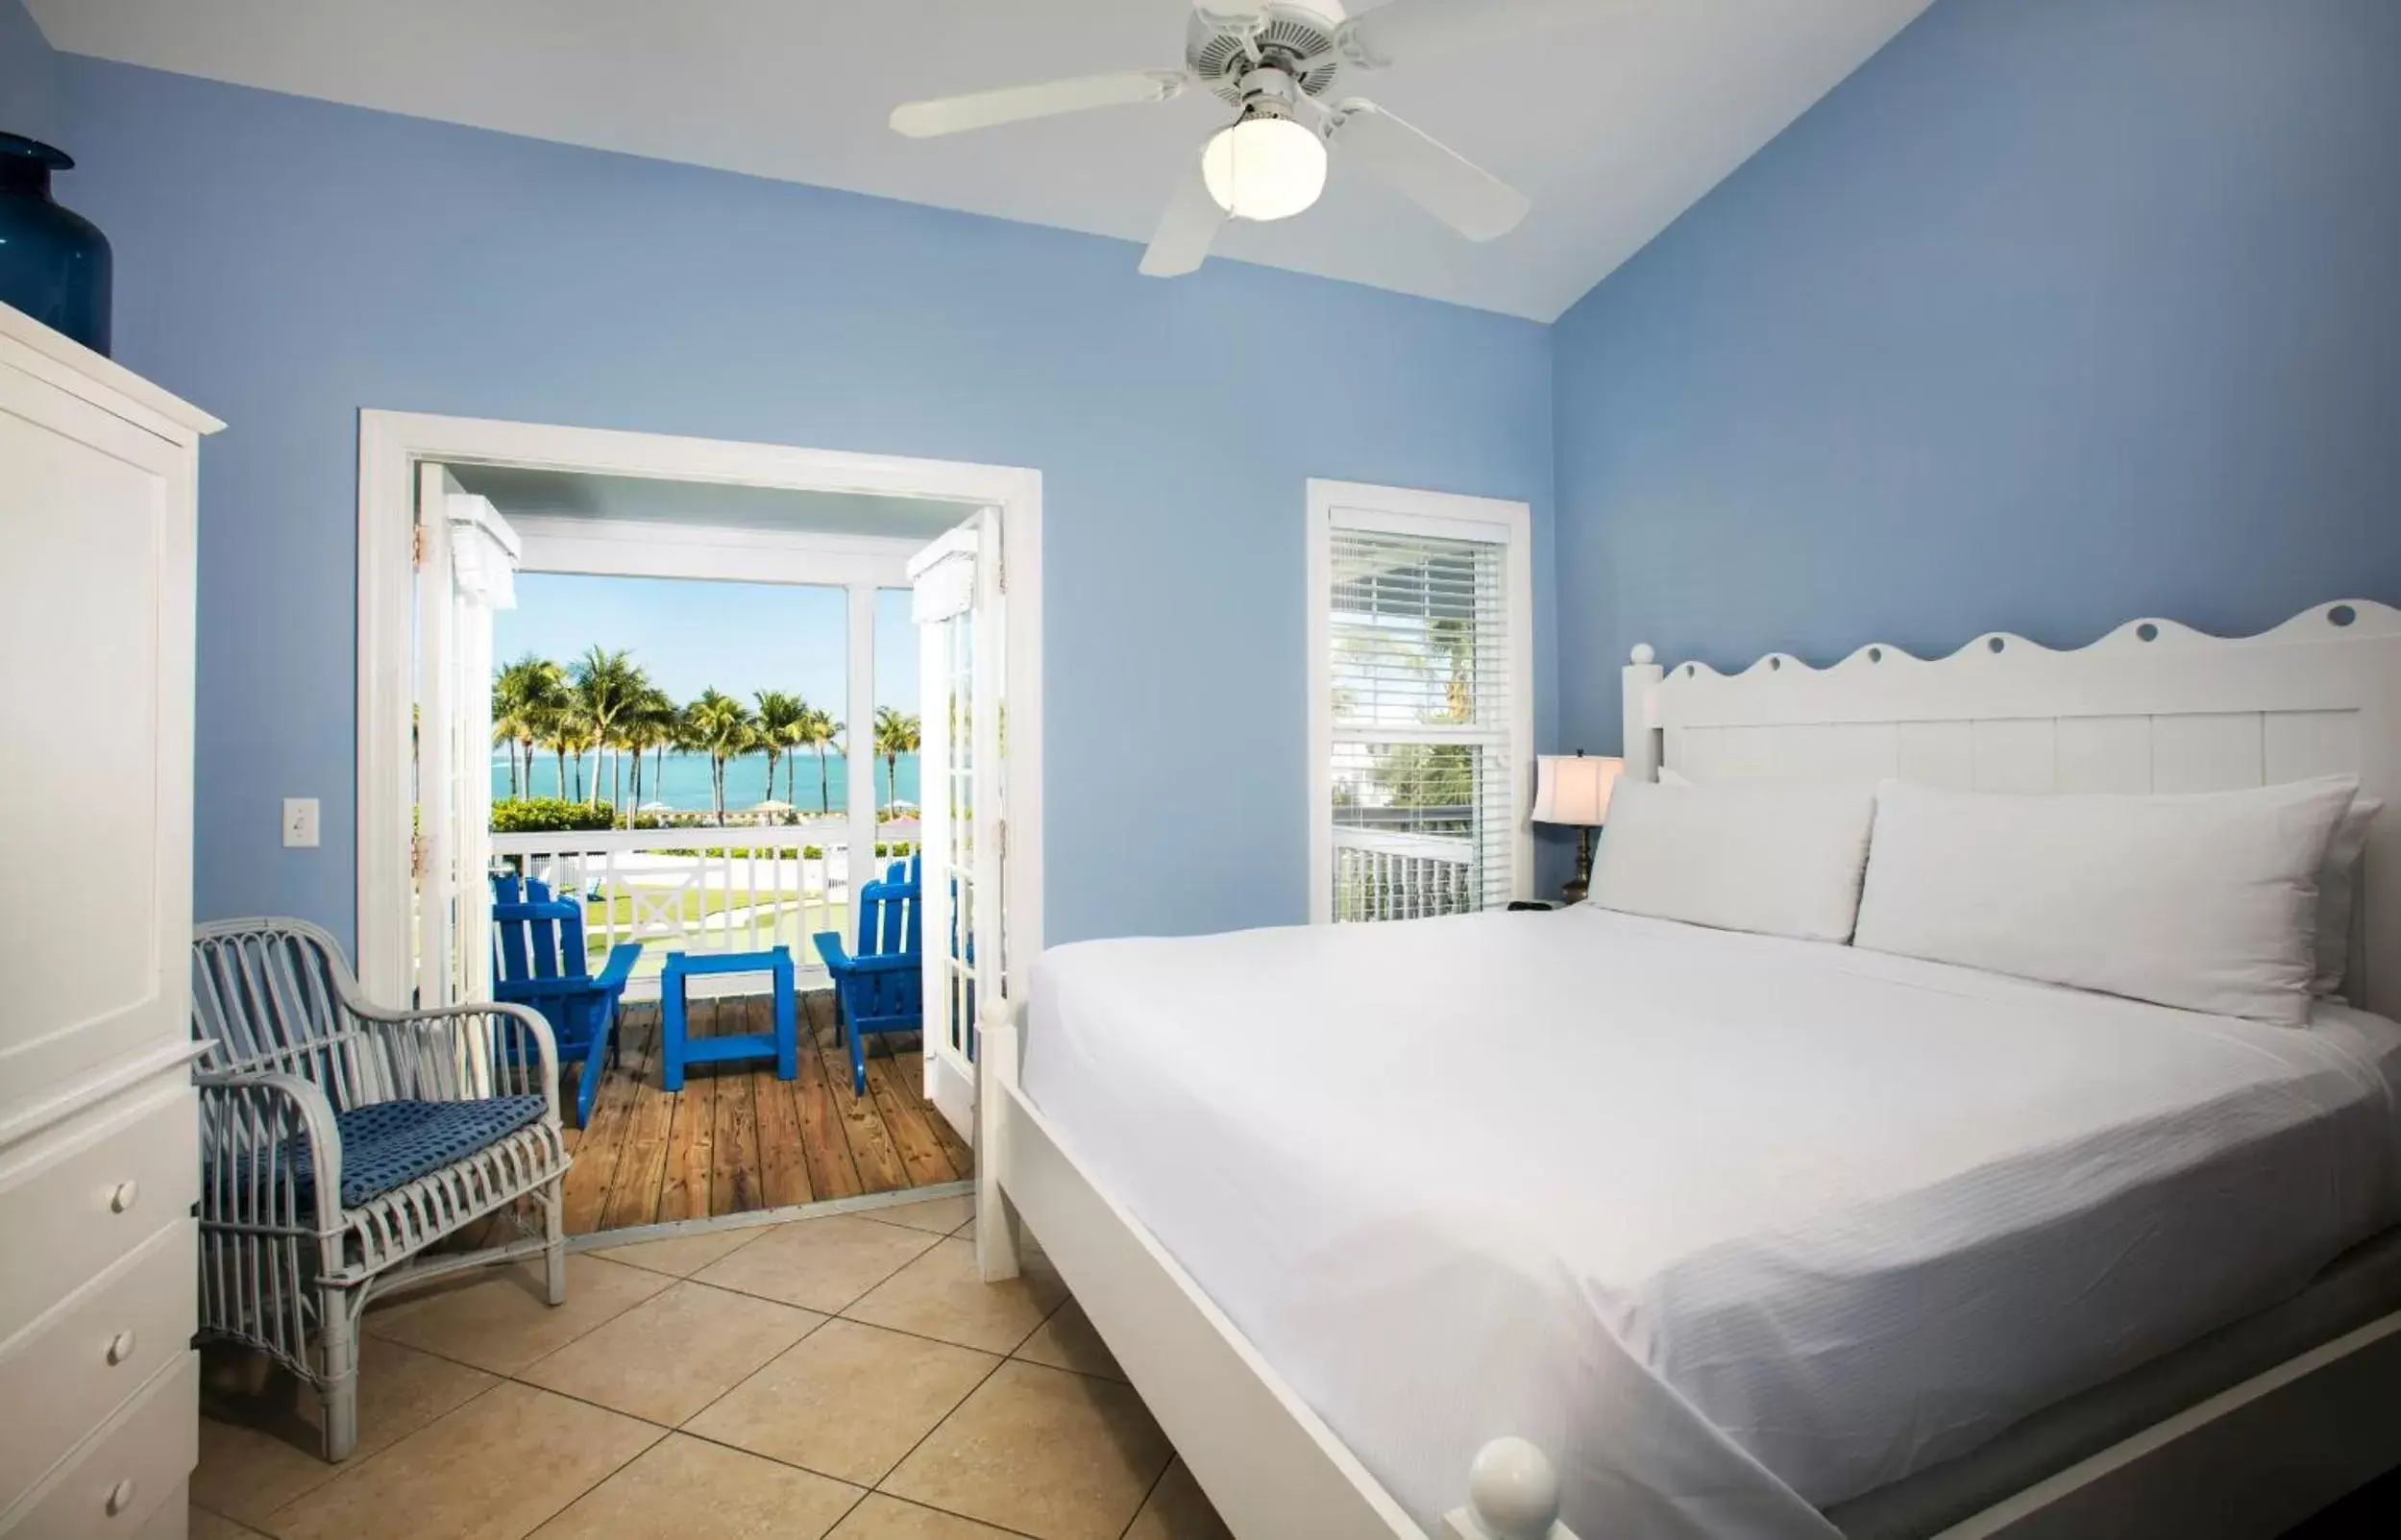 Bedroom in Tranquility Bay Resort